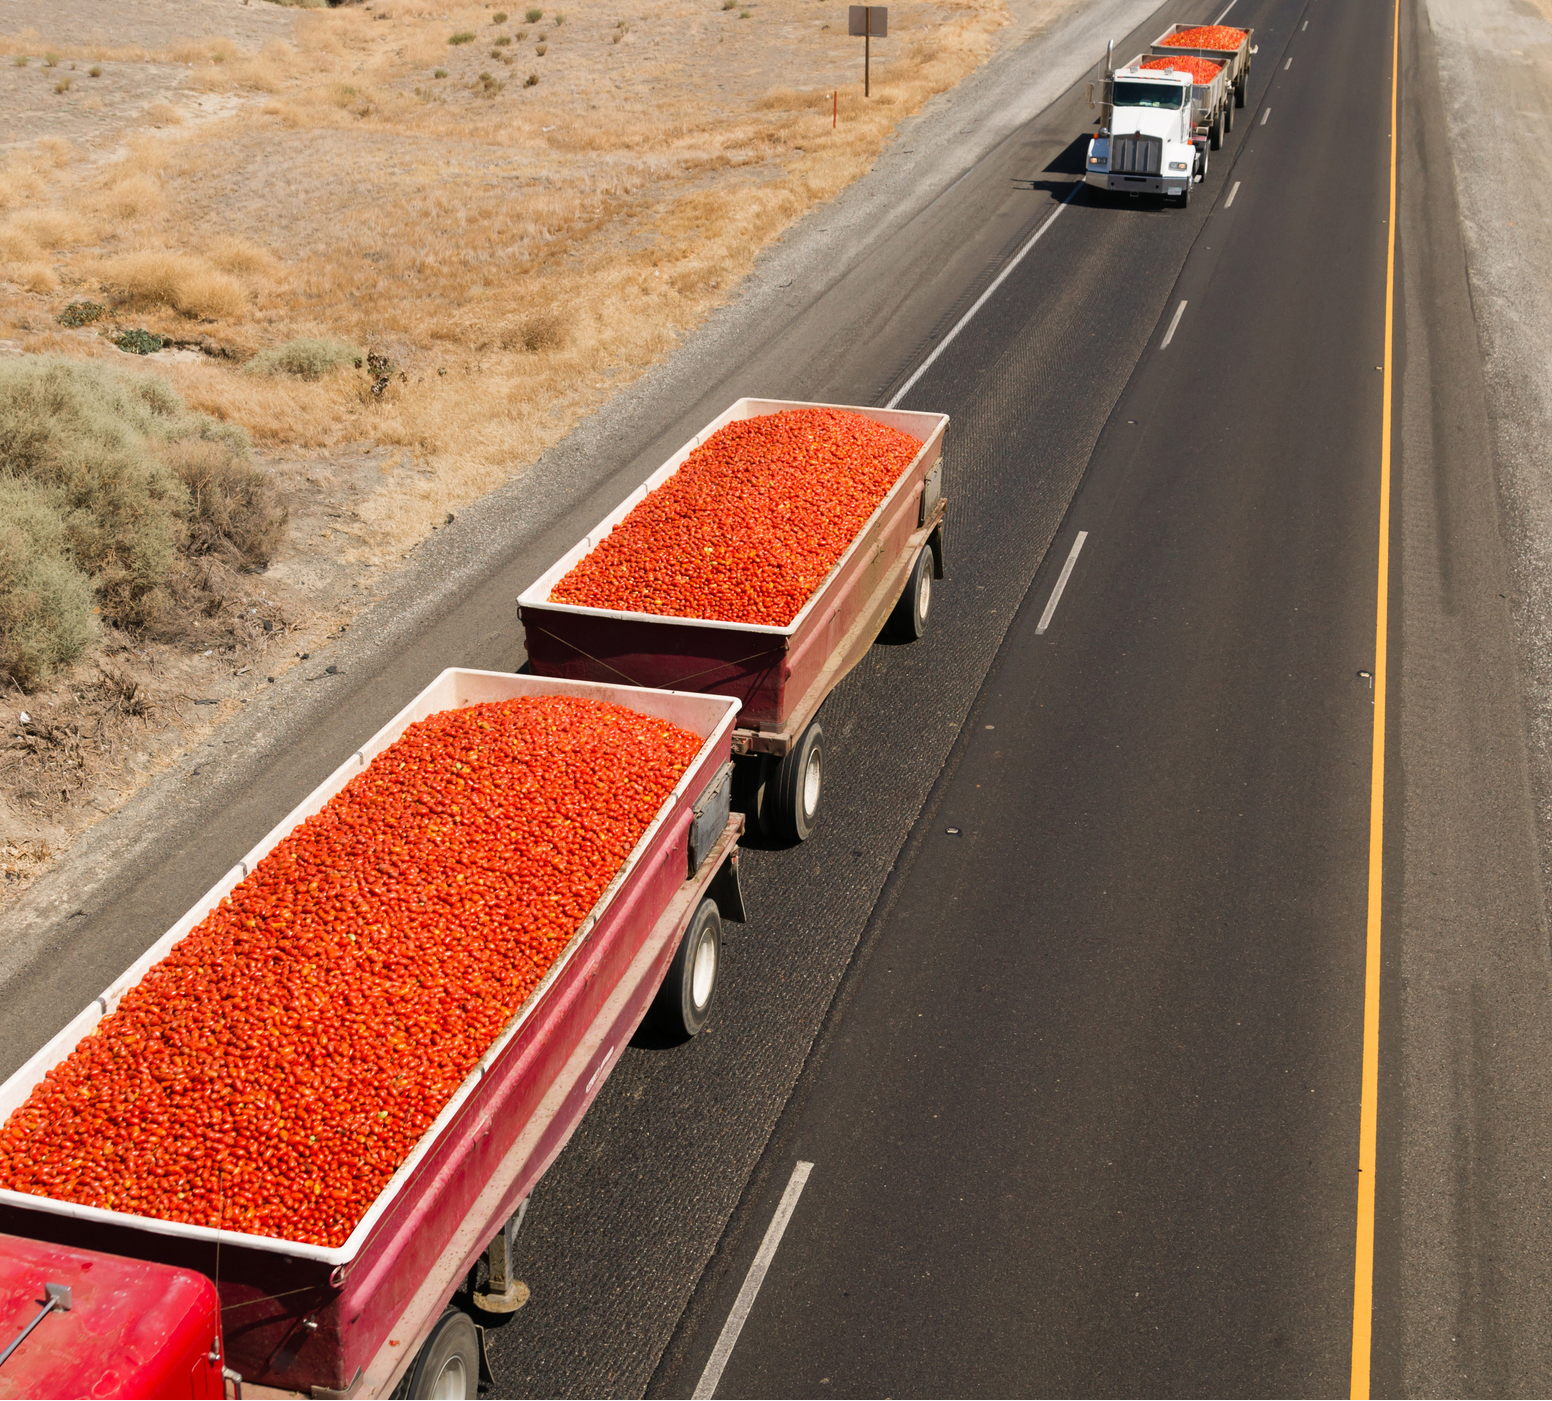 tomatoes in trucks